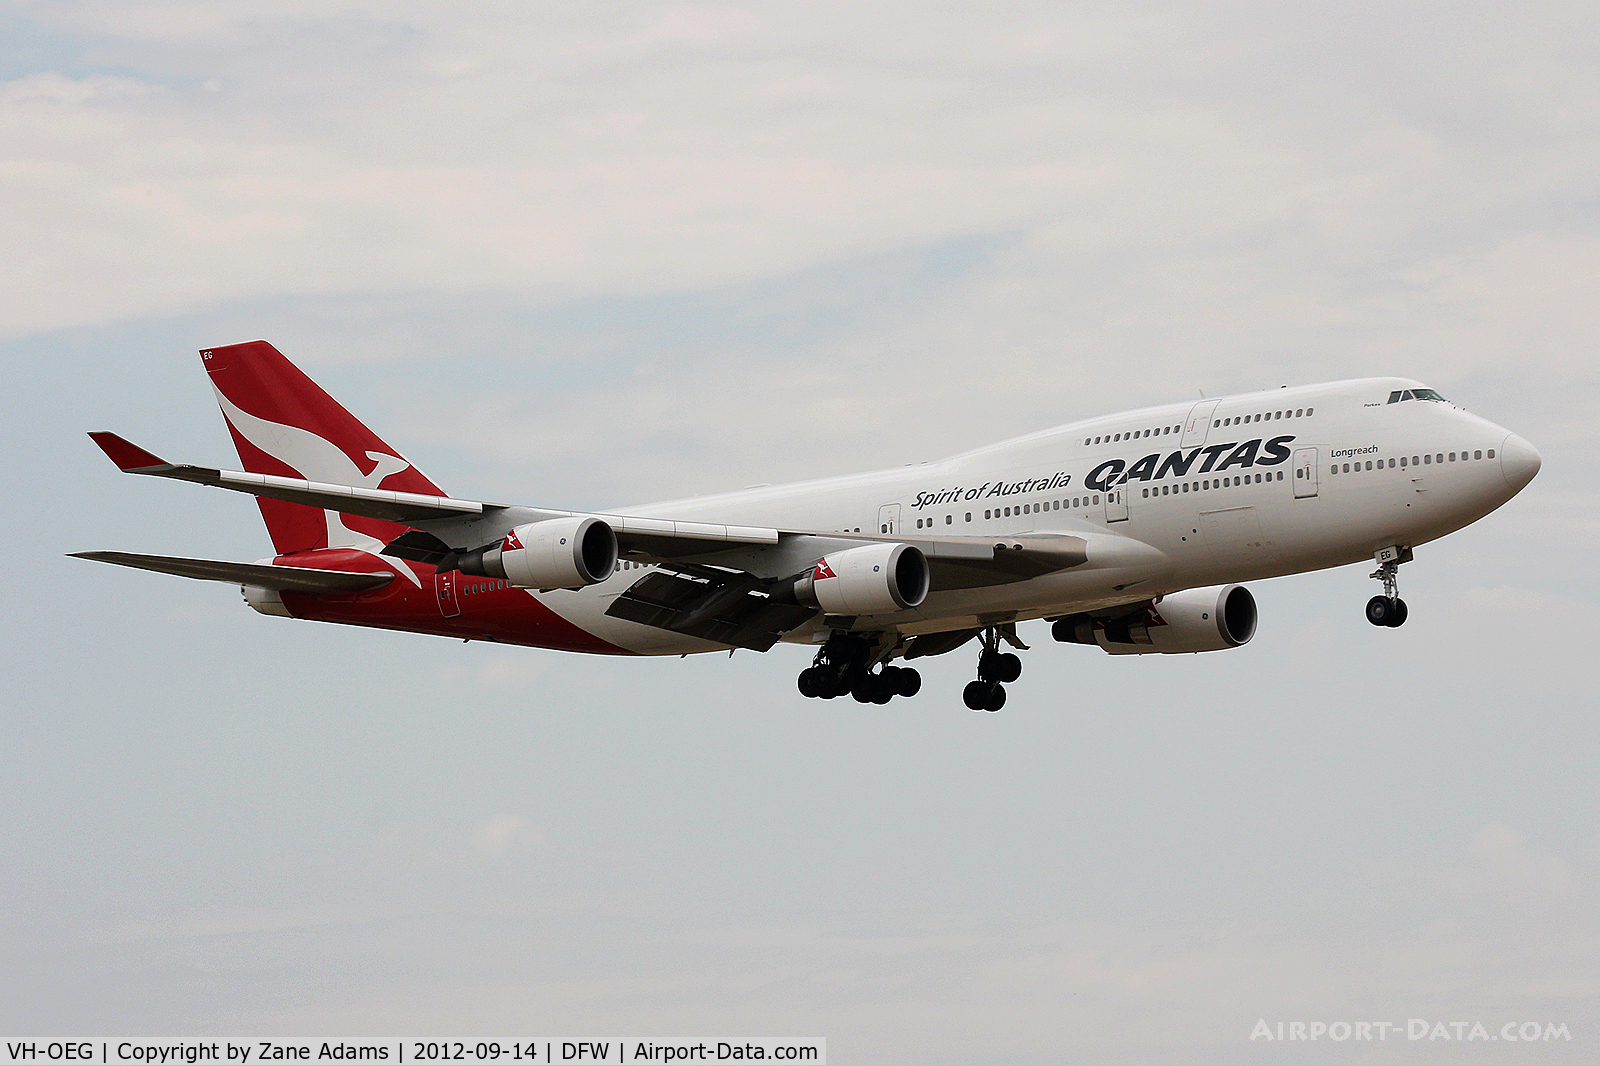 VH-OEG, 2002 Boeing 747-438/ER C/N 32911, Qantas Airlines landing at DFW Airport